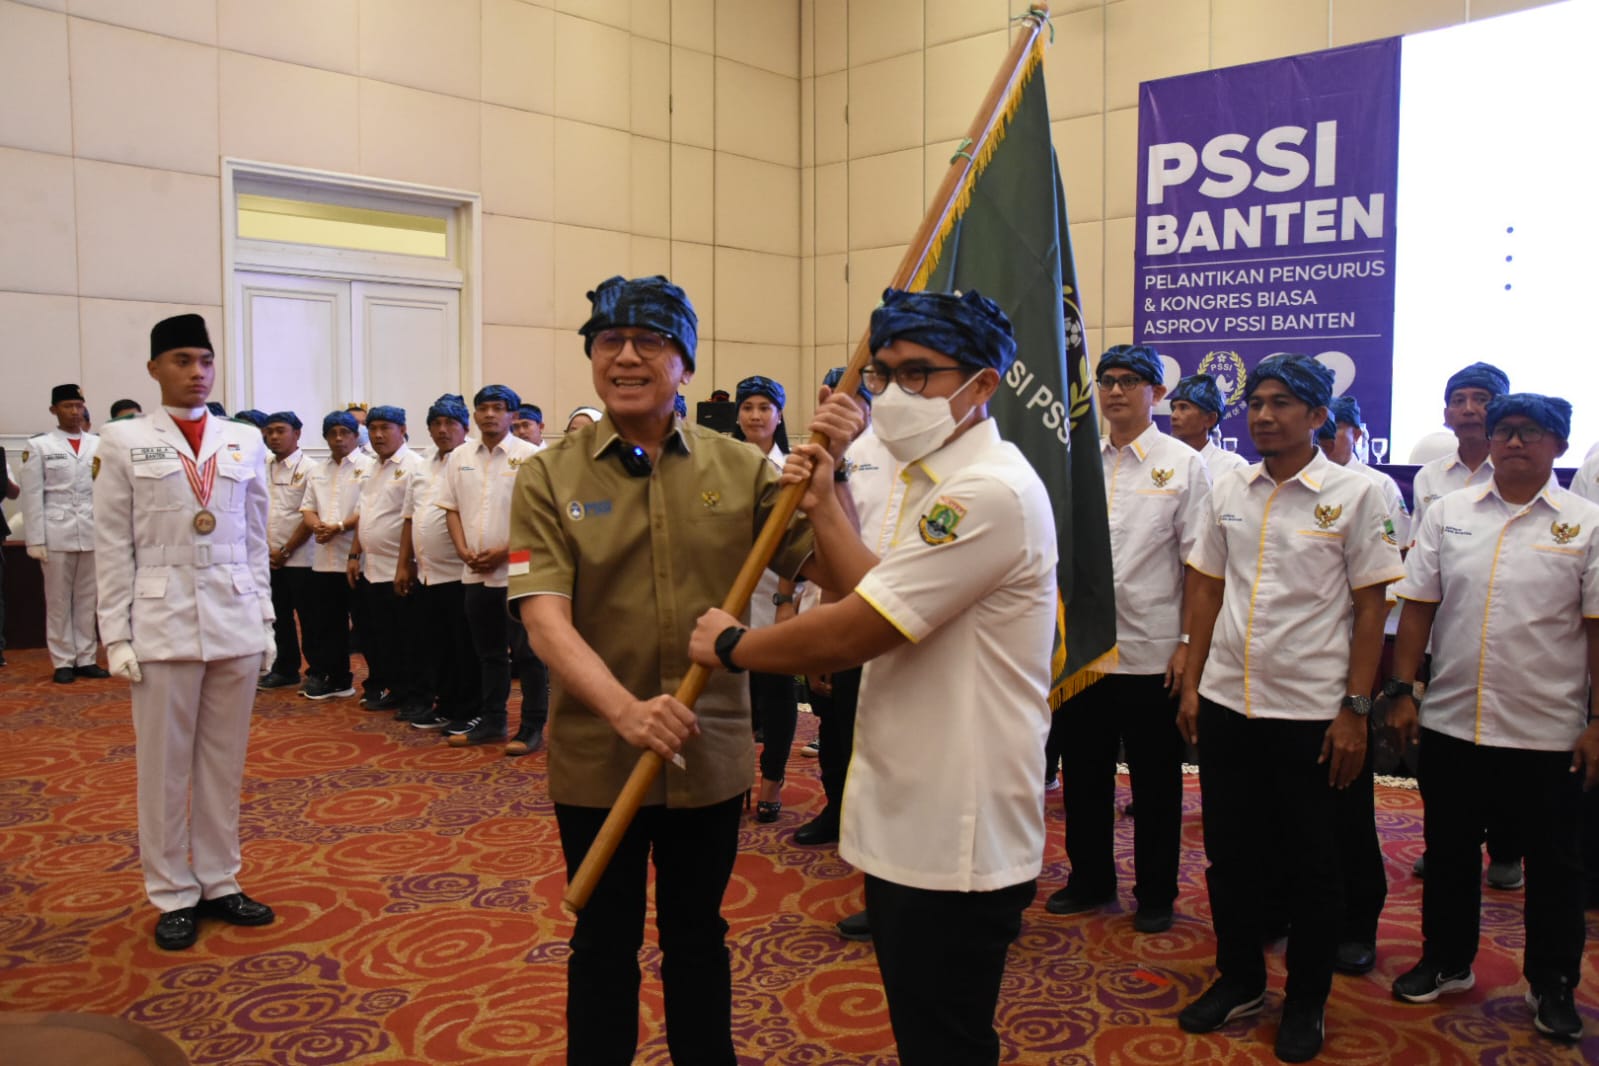 Wakil Walikota Tangerang Selatan Resmi Dilantik jadi Ketua Aspov PSSI Banten